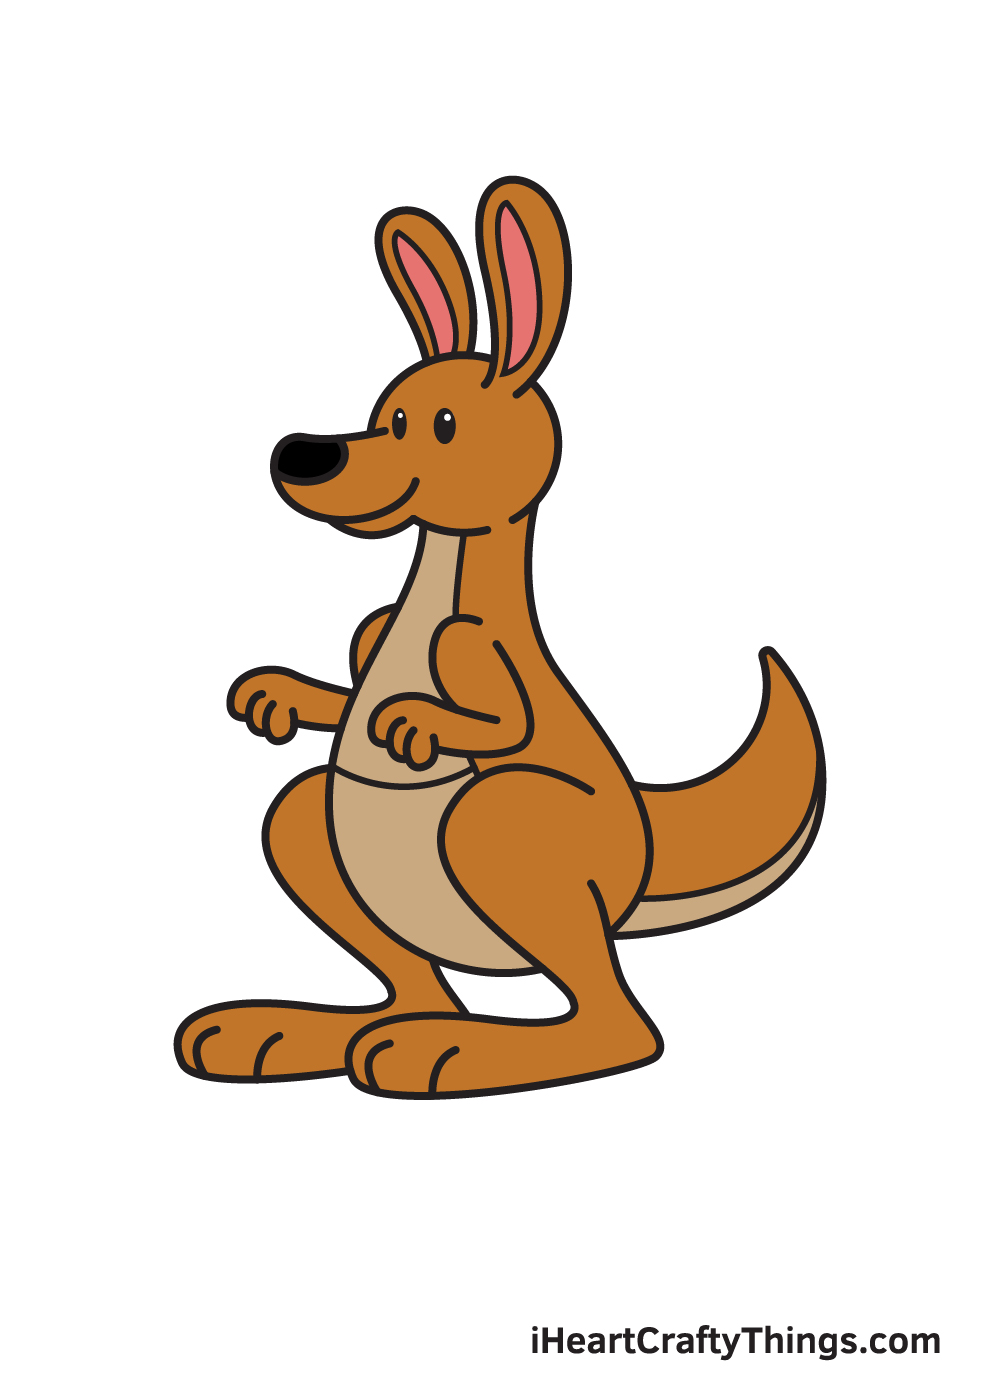 Kangaroo Drawing How To Draw A Kangaroo Step By Step